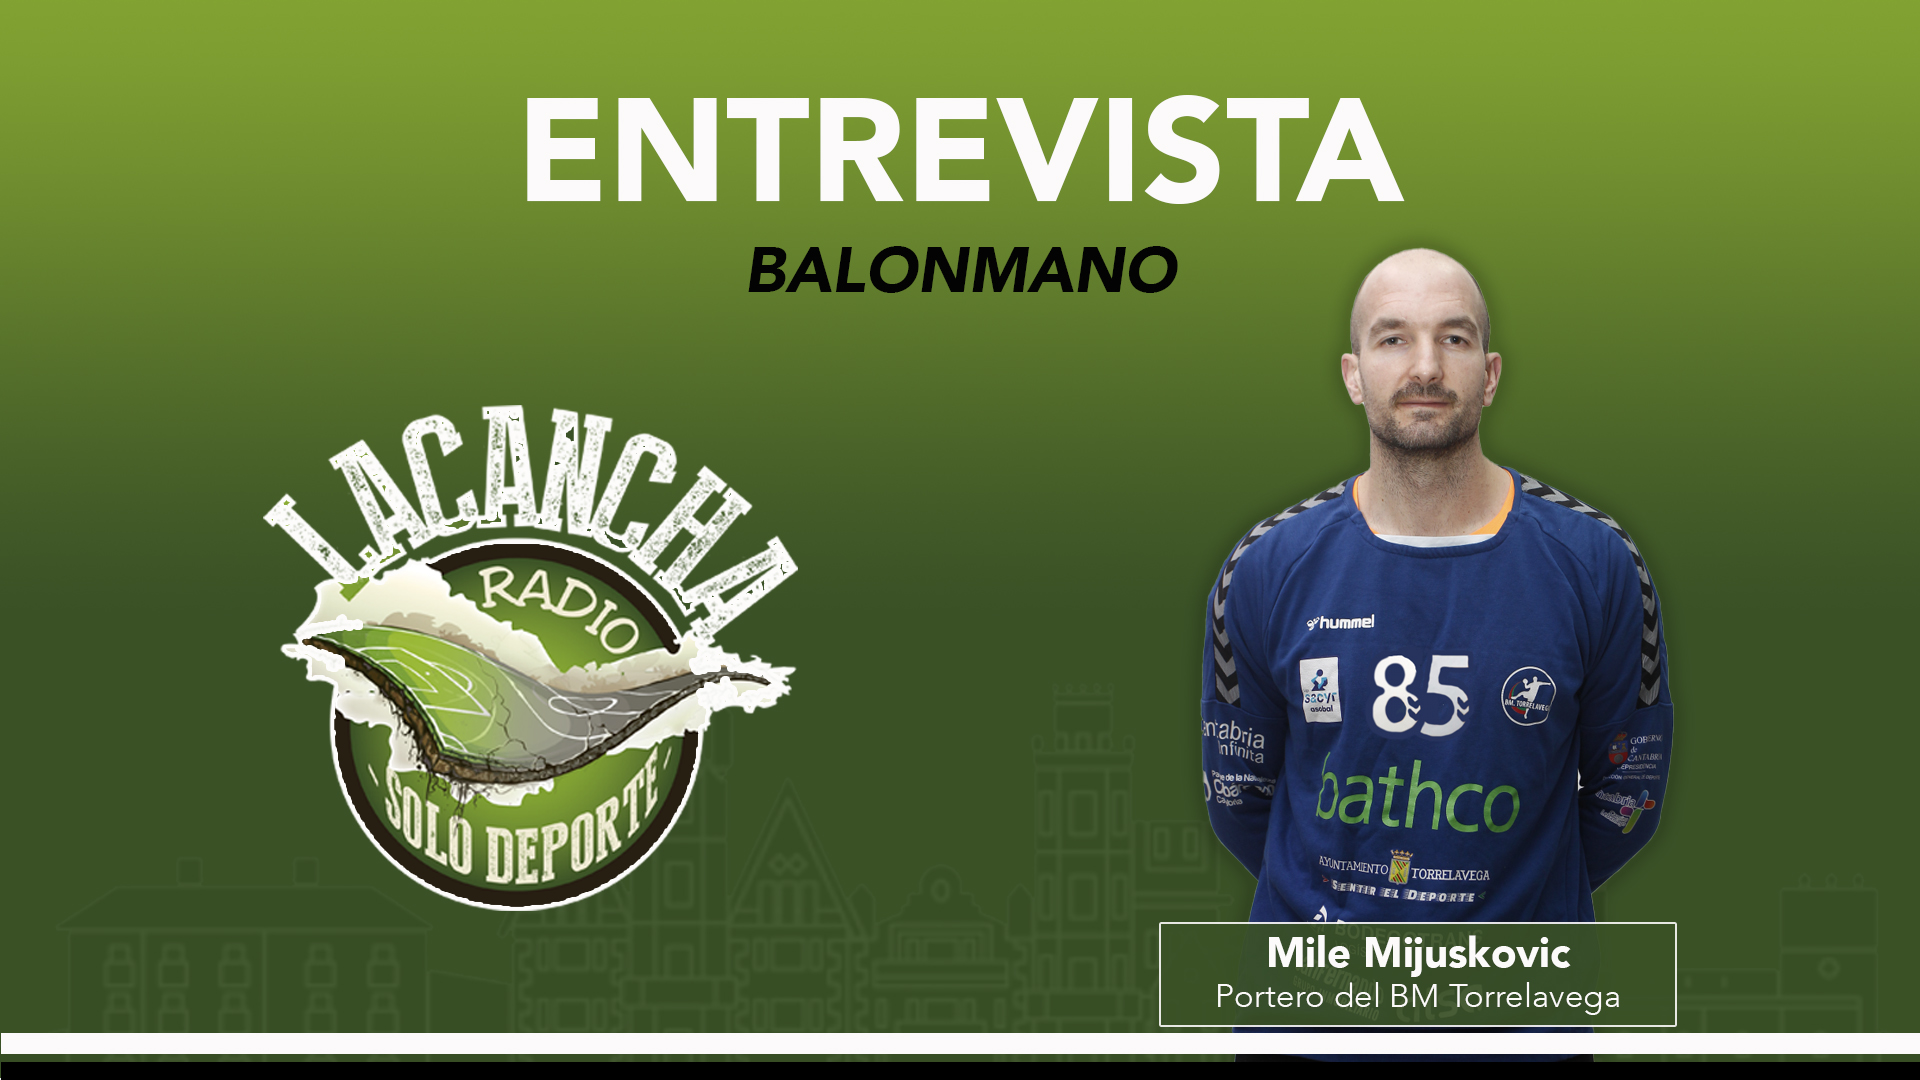 Entrevista con con Mile Mijuskovic, nuevo portero del Bathco BM Torrelavega (23/03/2022)